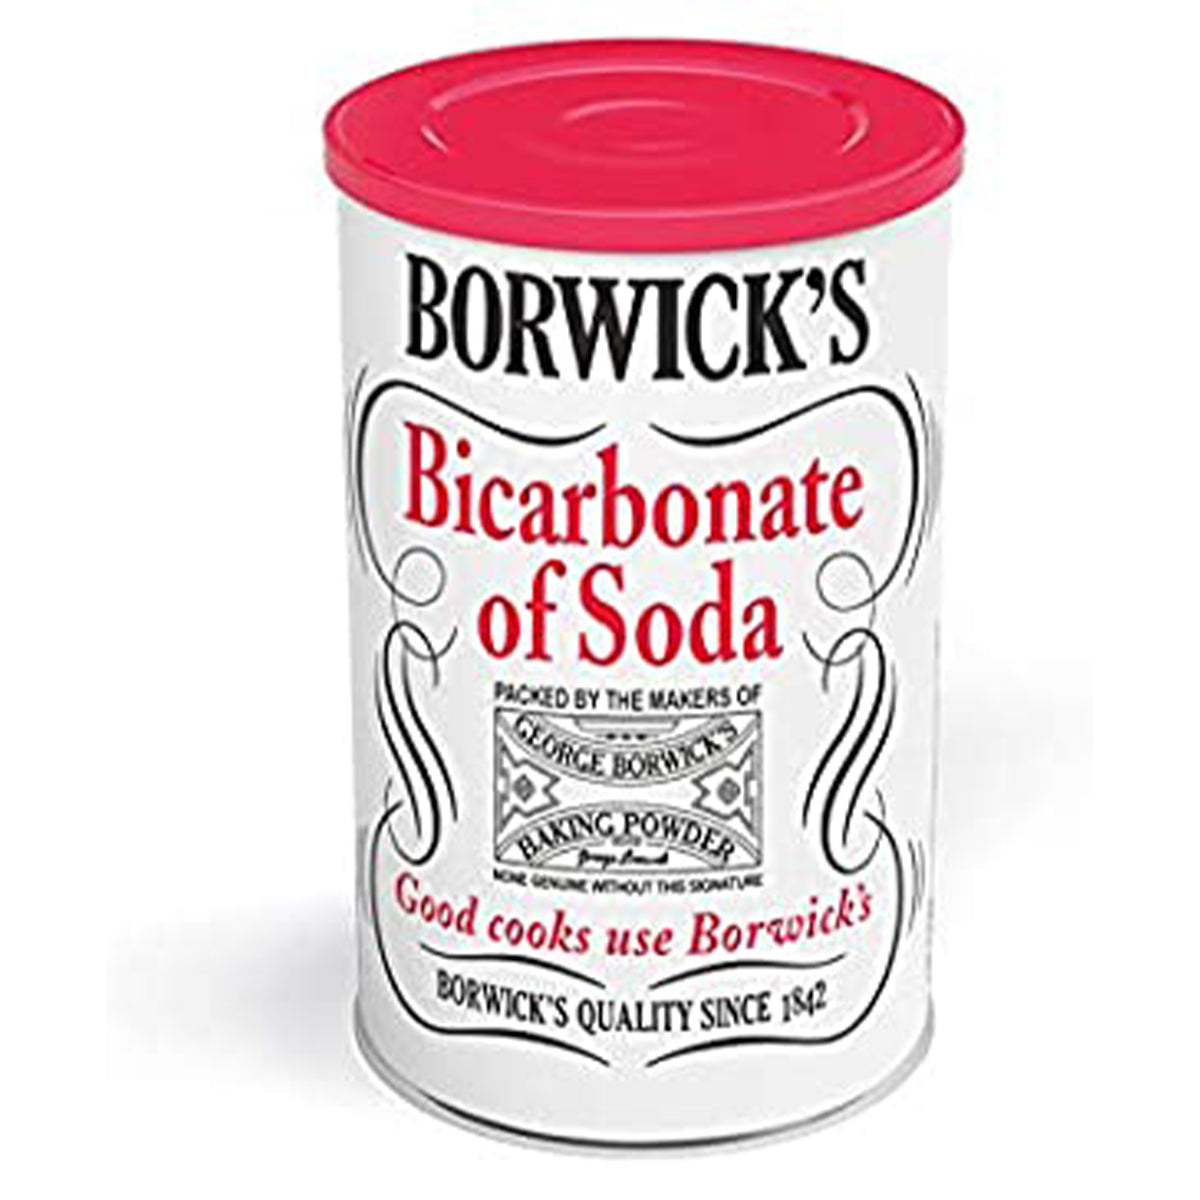 A tin of Borwicks - Bicarbonate Soda - 100g.